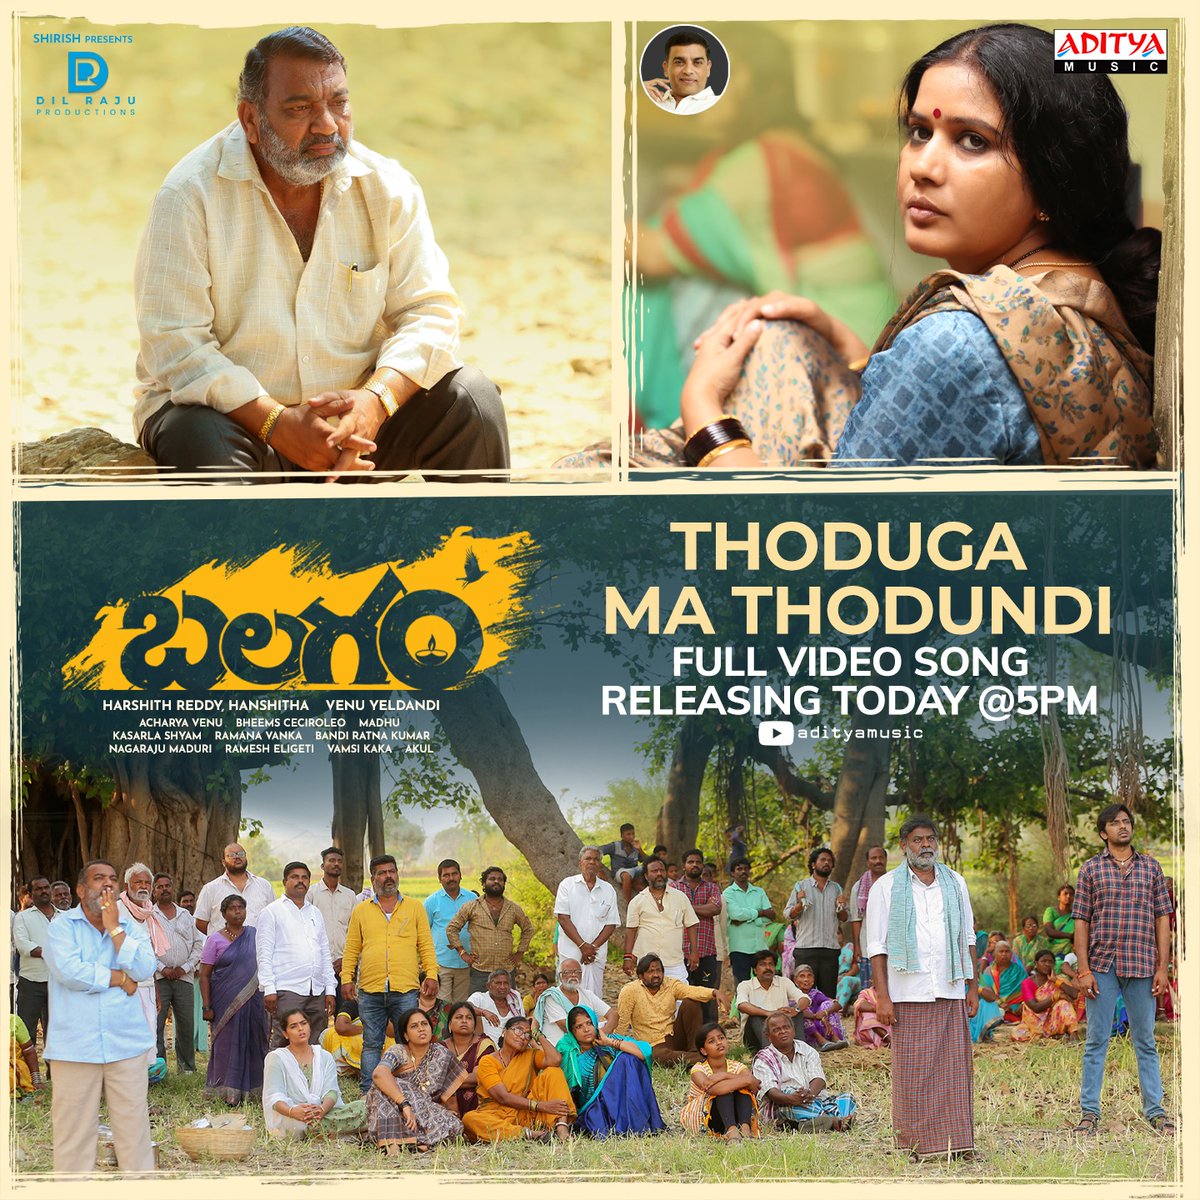 The full video song of #ThodugaMaThodundi from the superhit movie #Balagam, featuring @VenuYeldandi9 @priyadarshi_i @kavyakalyanram, #Bheemsceciroleo